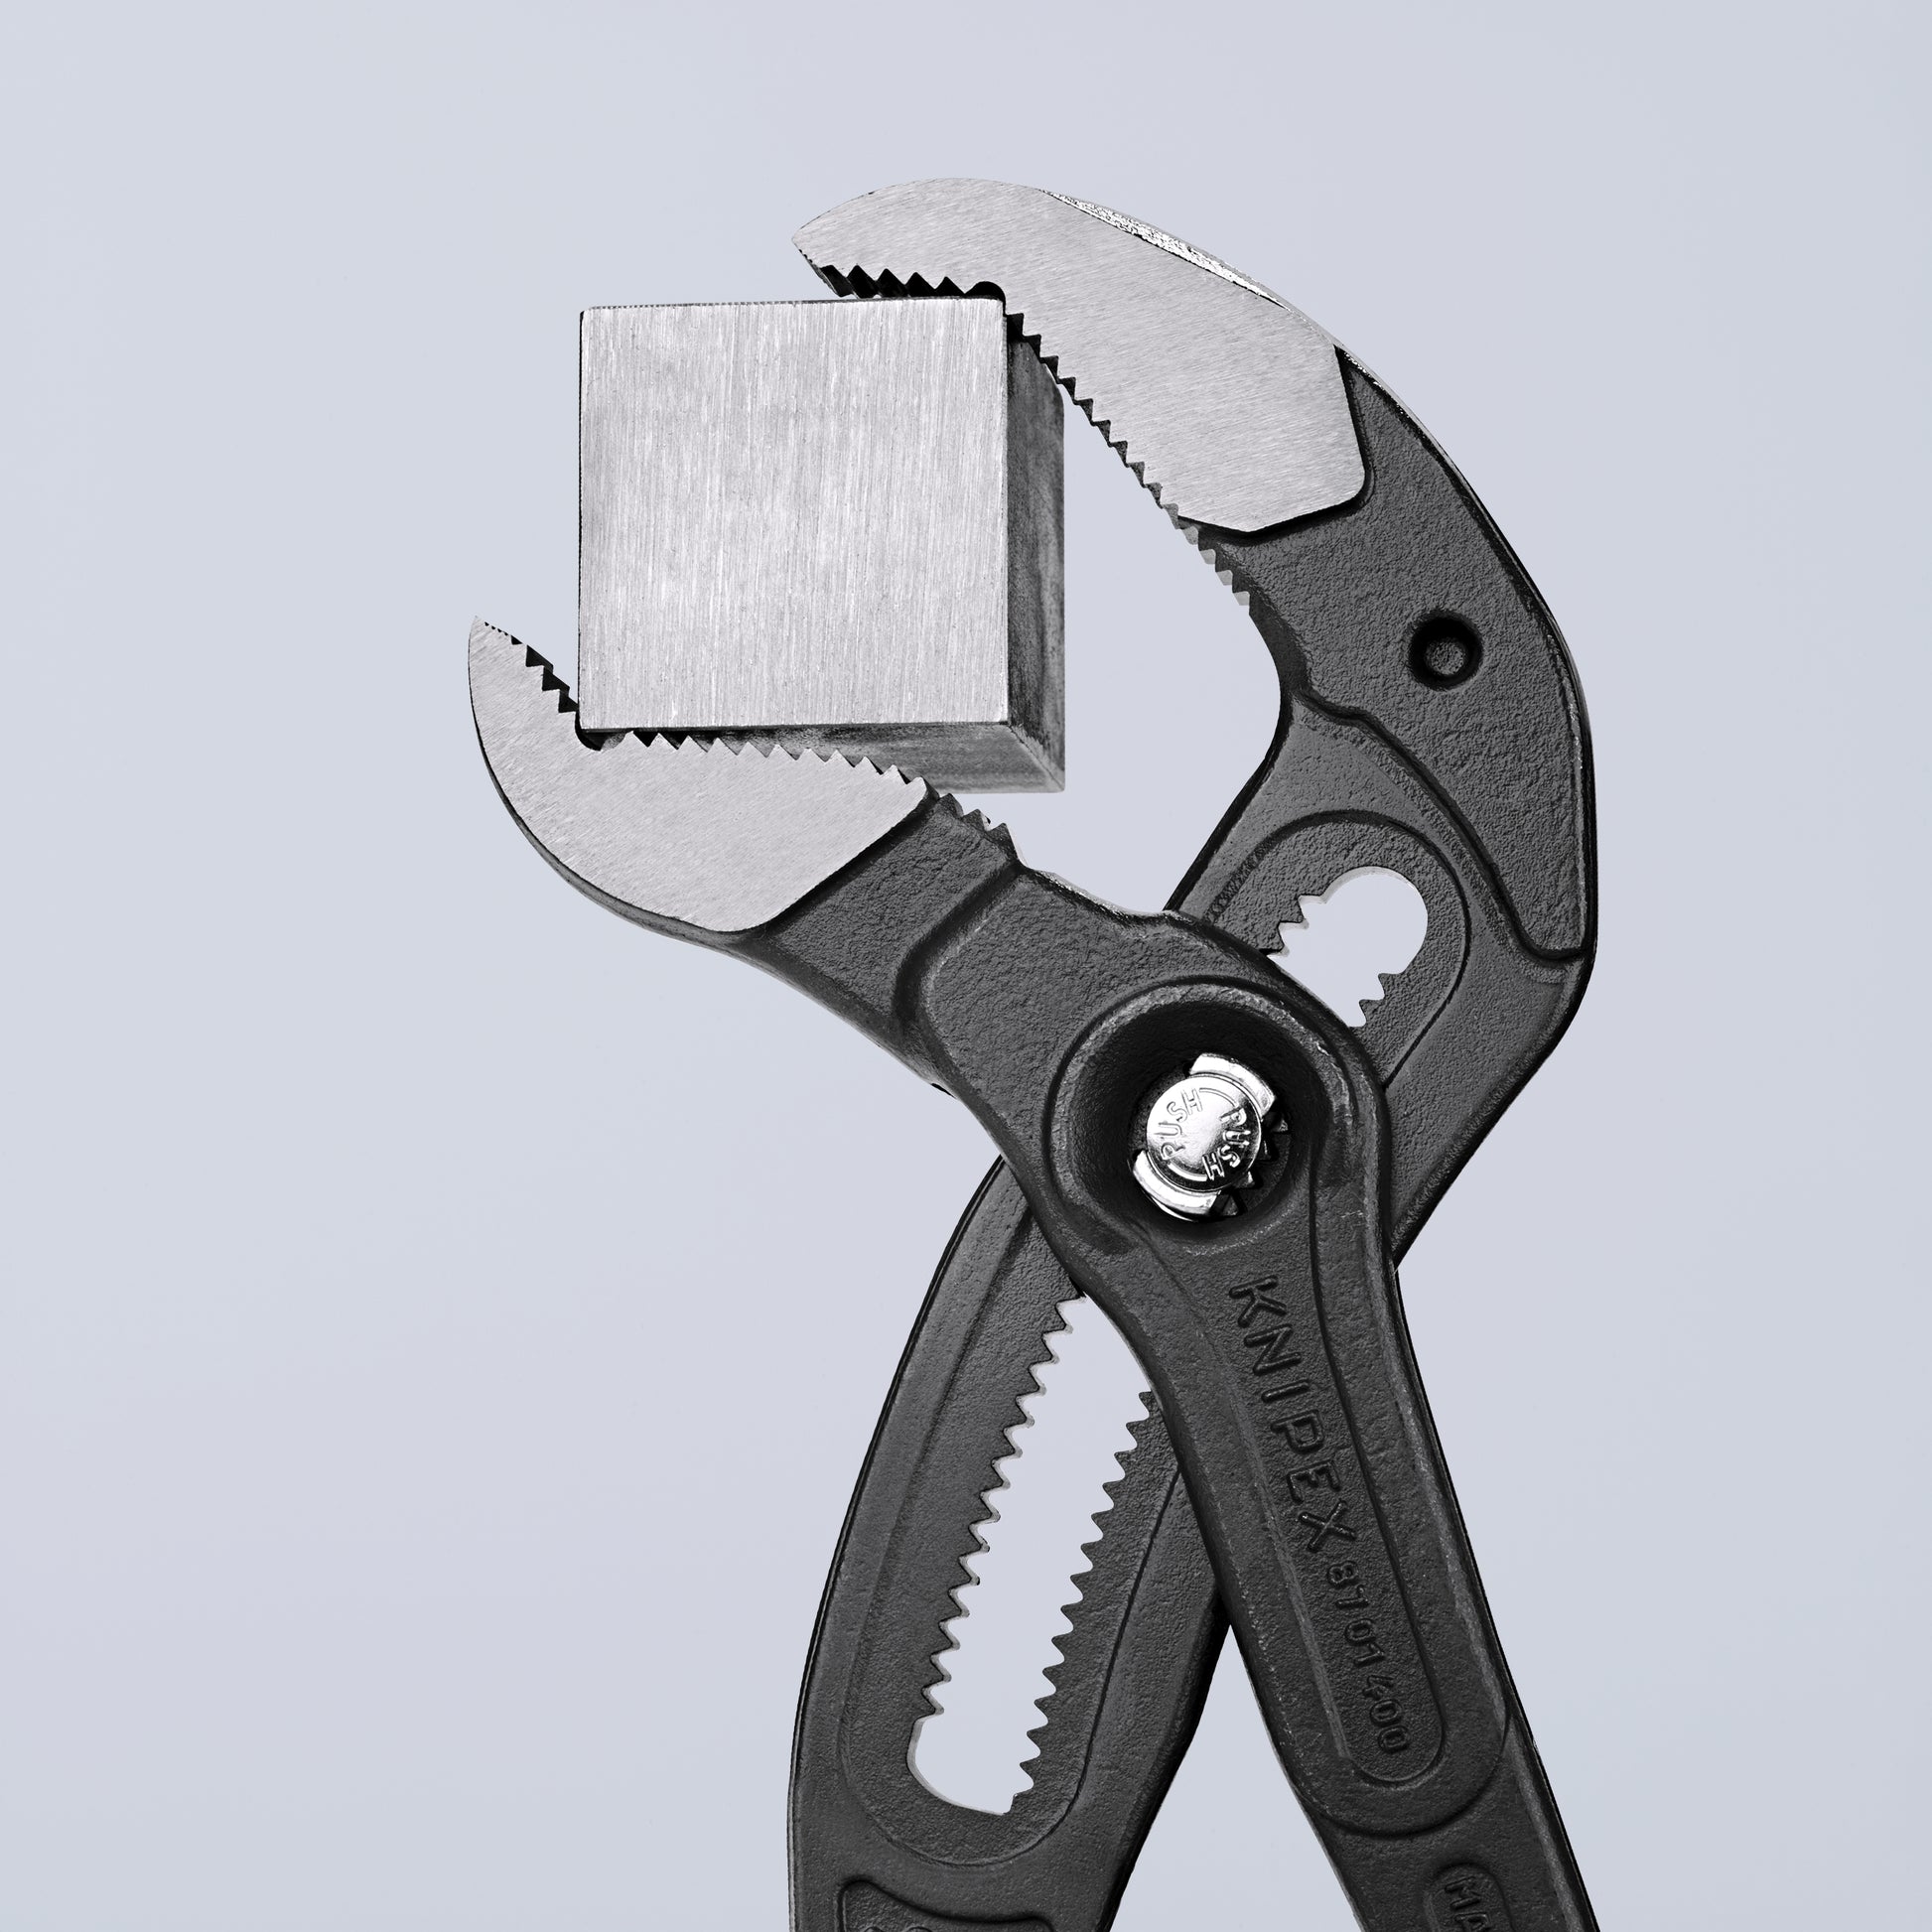 Knipex 12 Cobra Pliers - Chrome w/ Plastic Grip